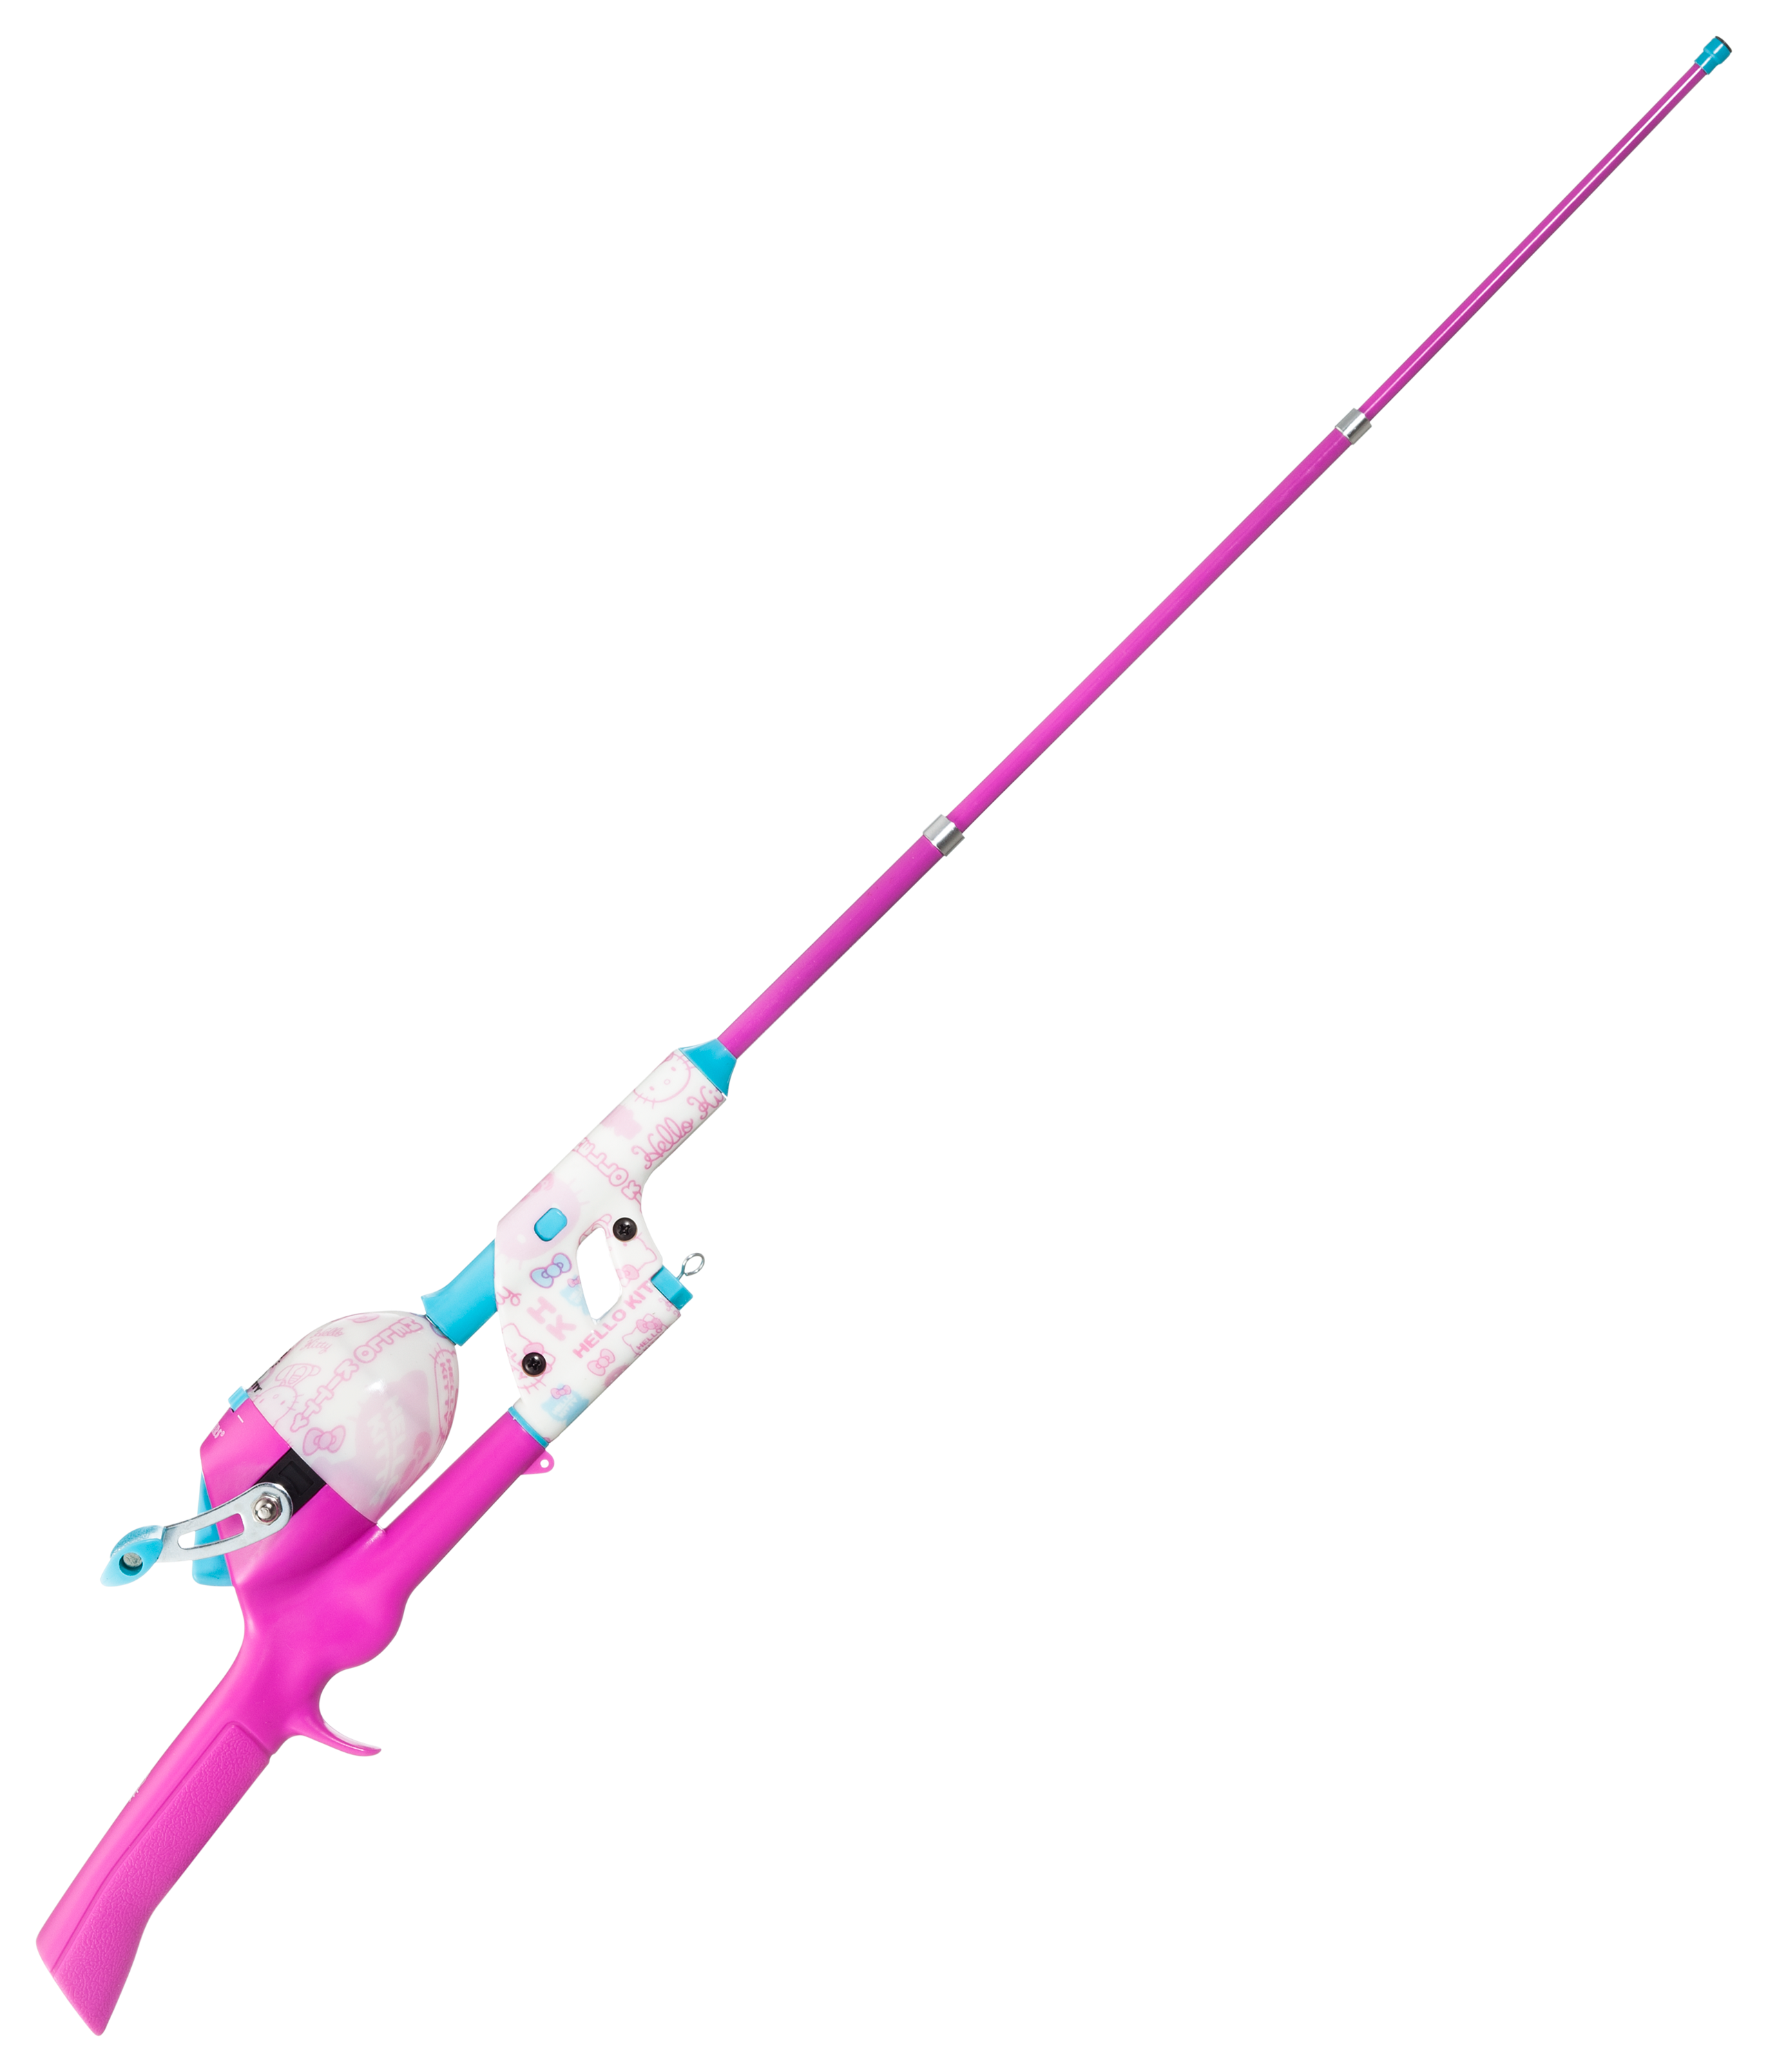 Lil' Angler Hello Kitty Tangle-Free Telescopic Fishing Rod and